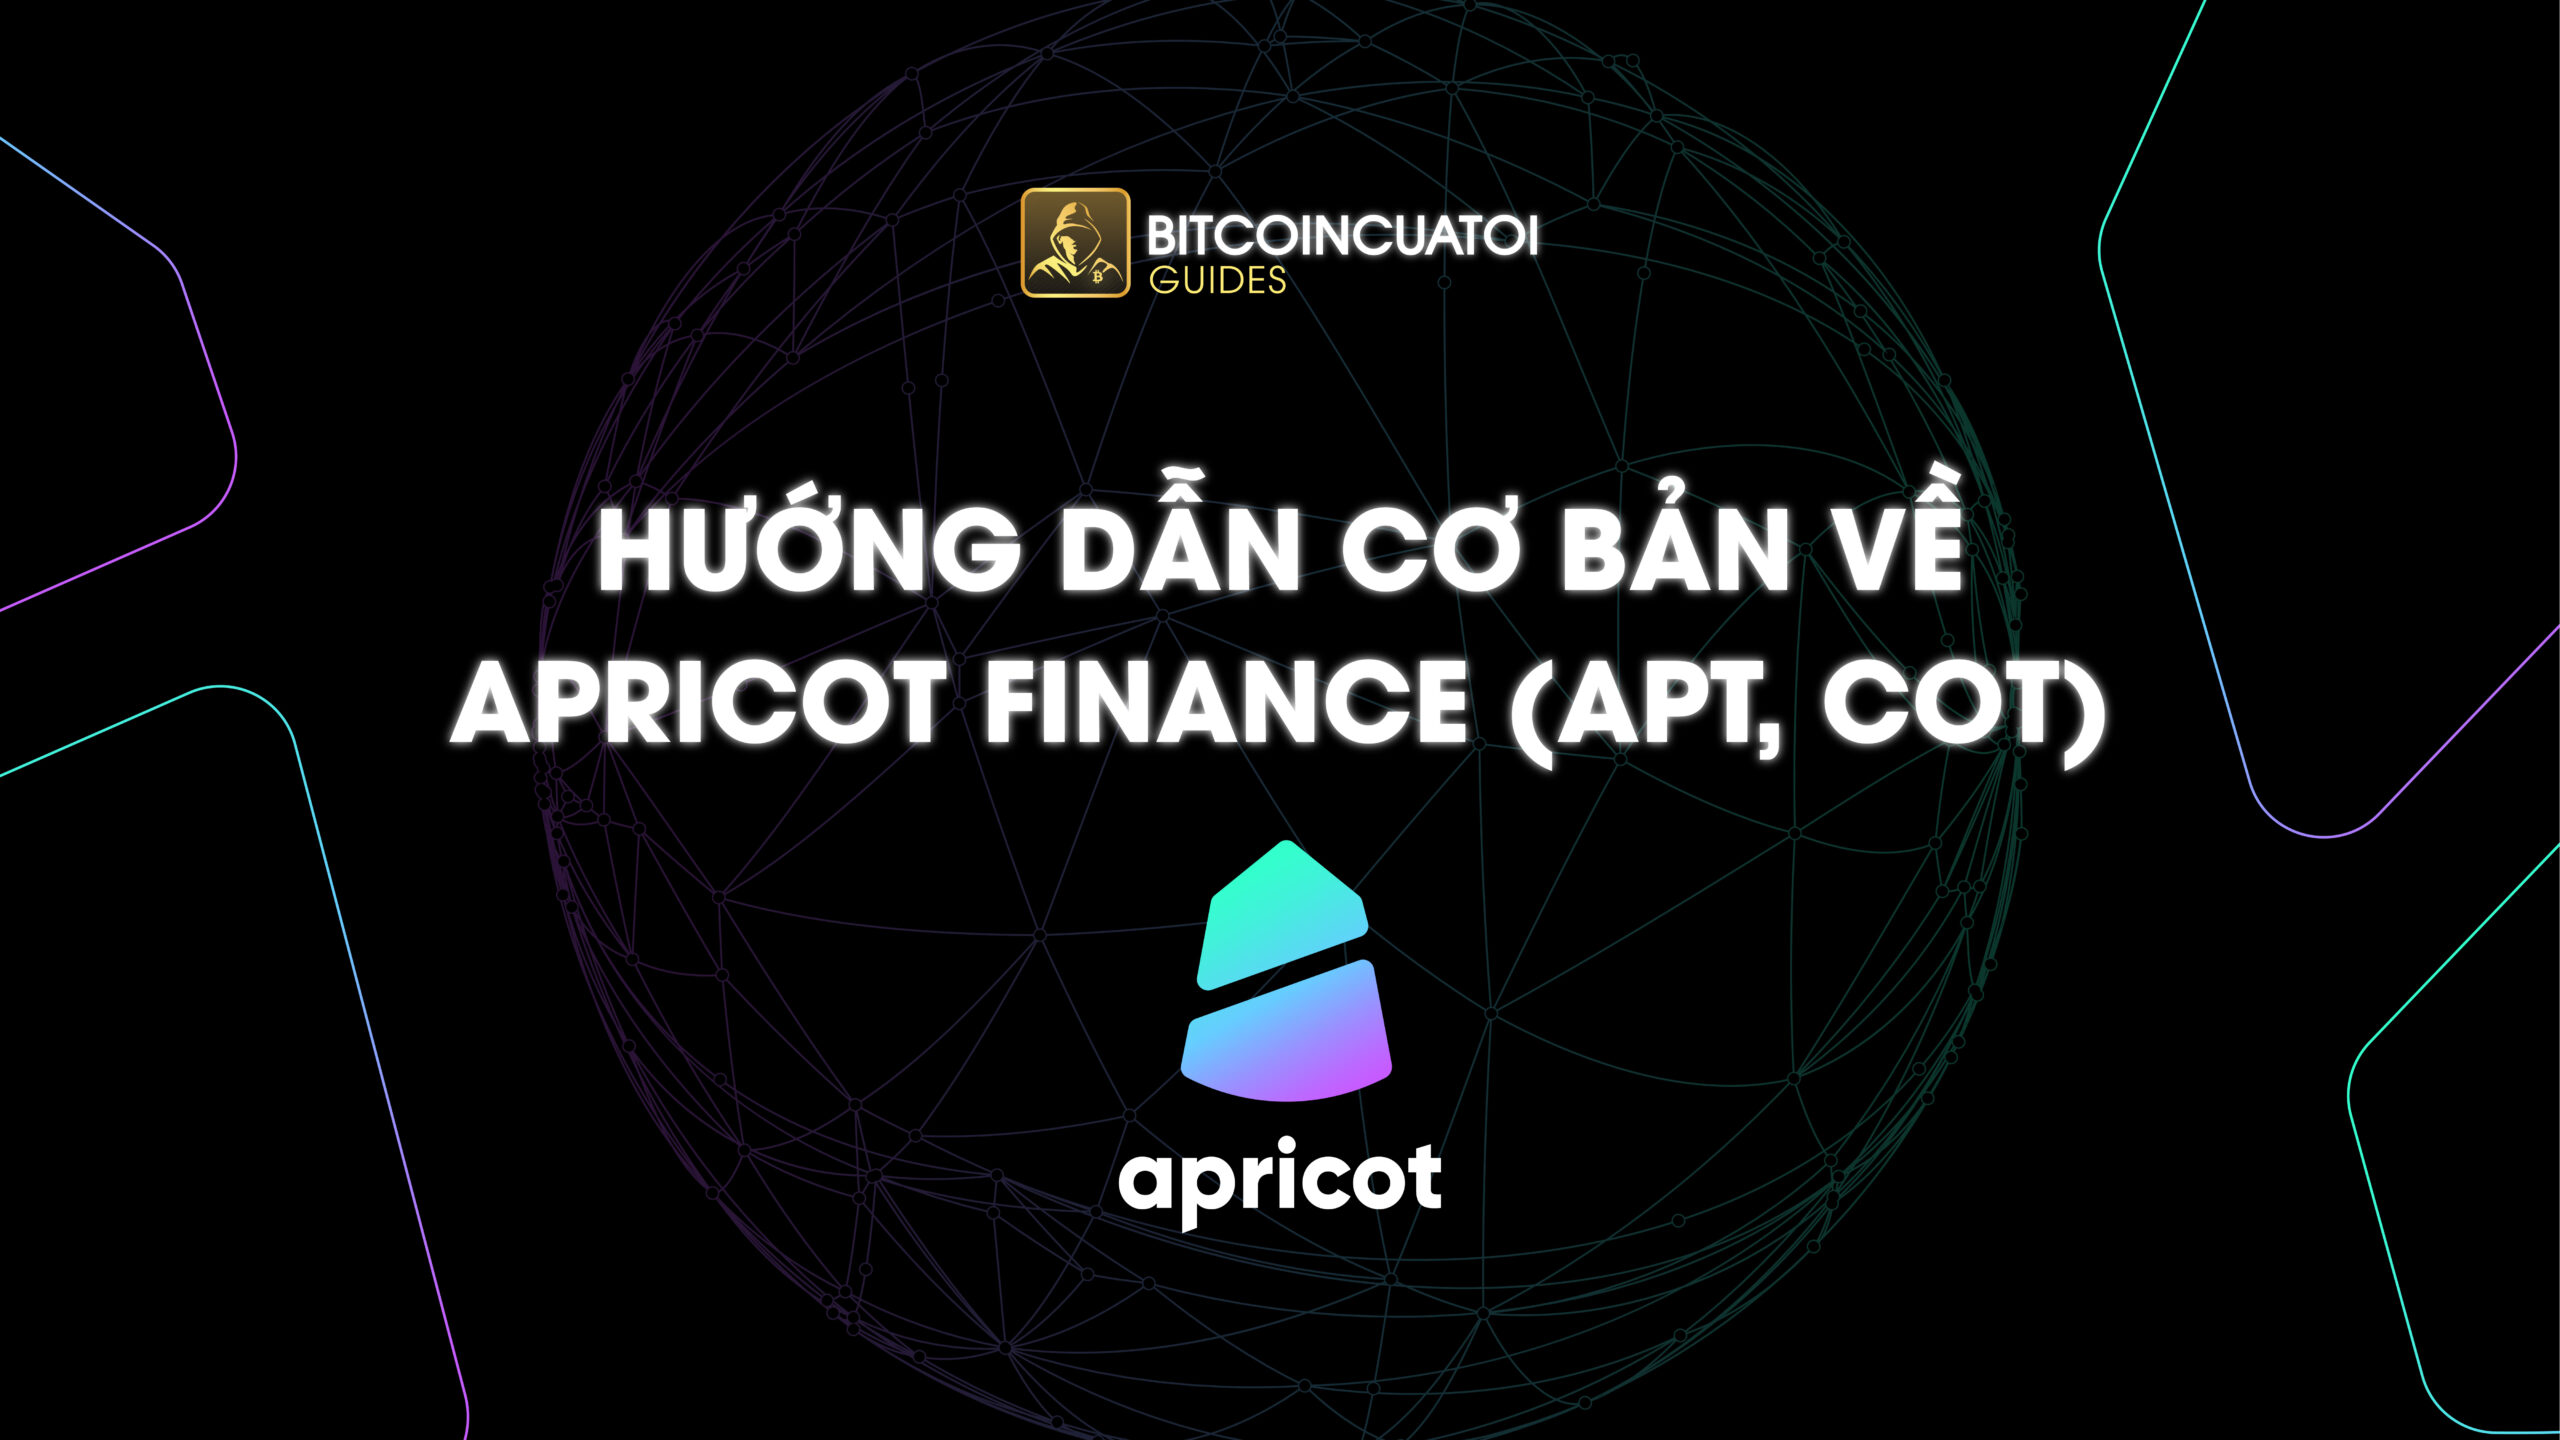 Hướng dẫn cơ bản về Apricot Finance (APT, COT)